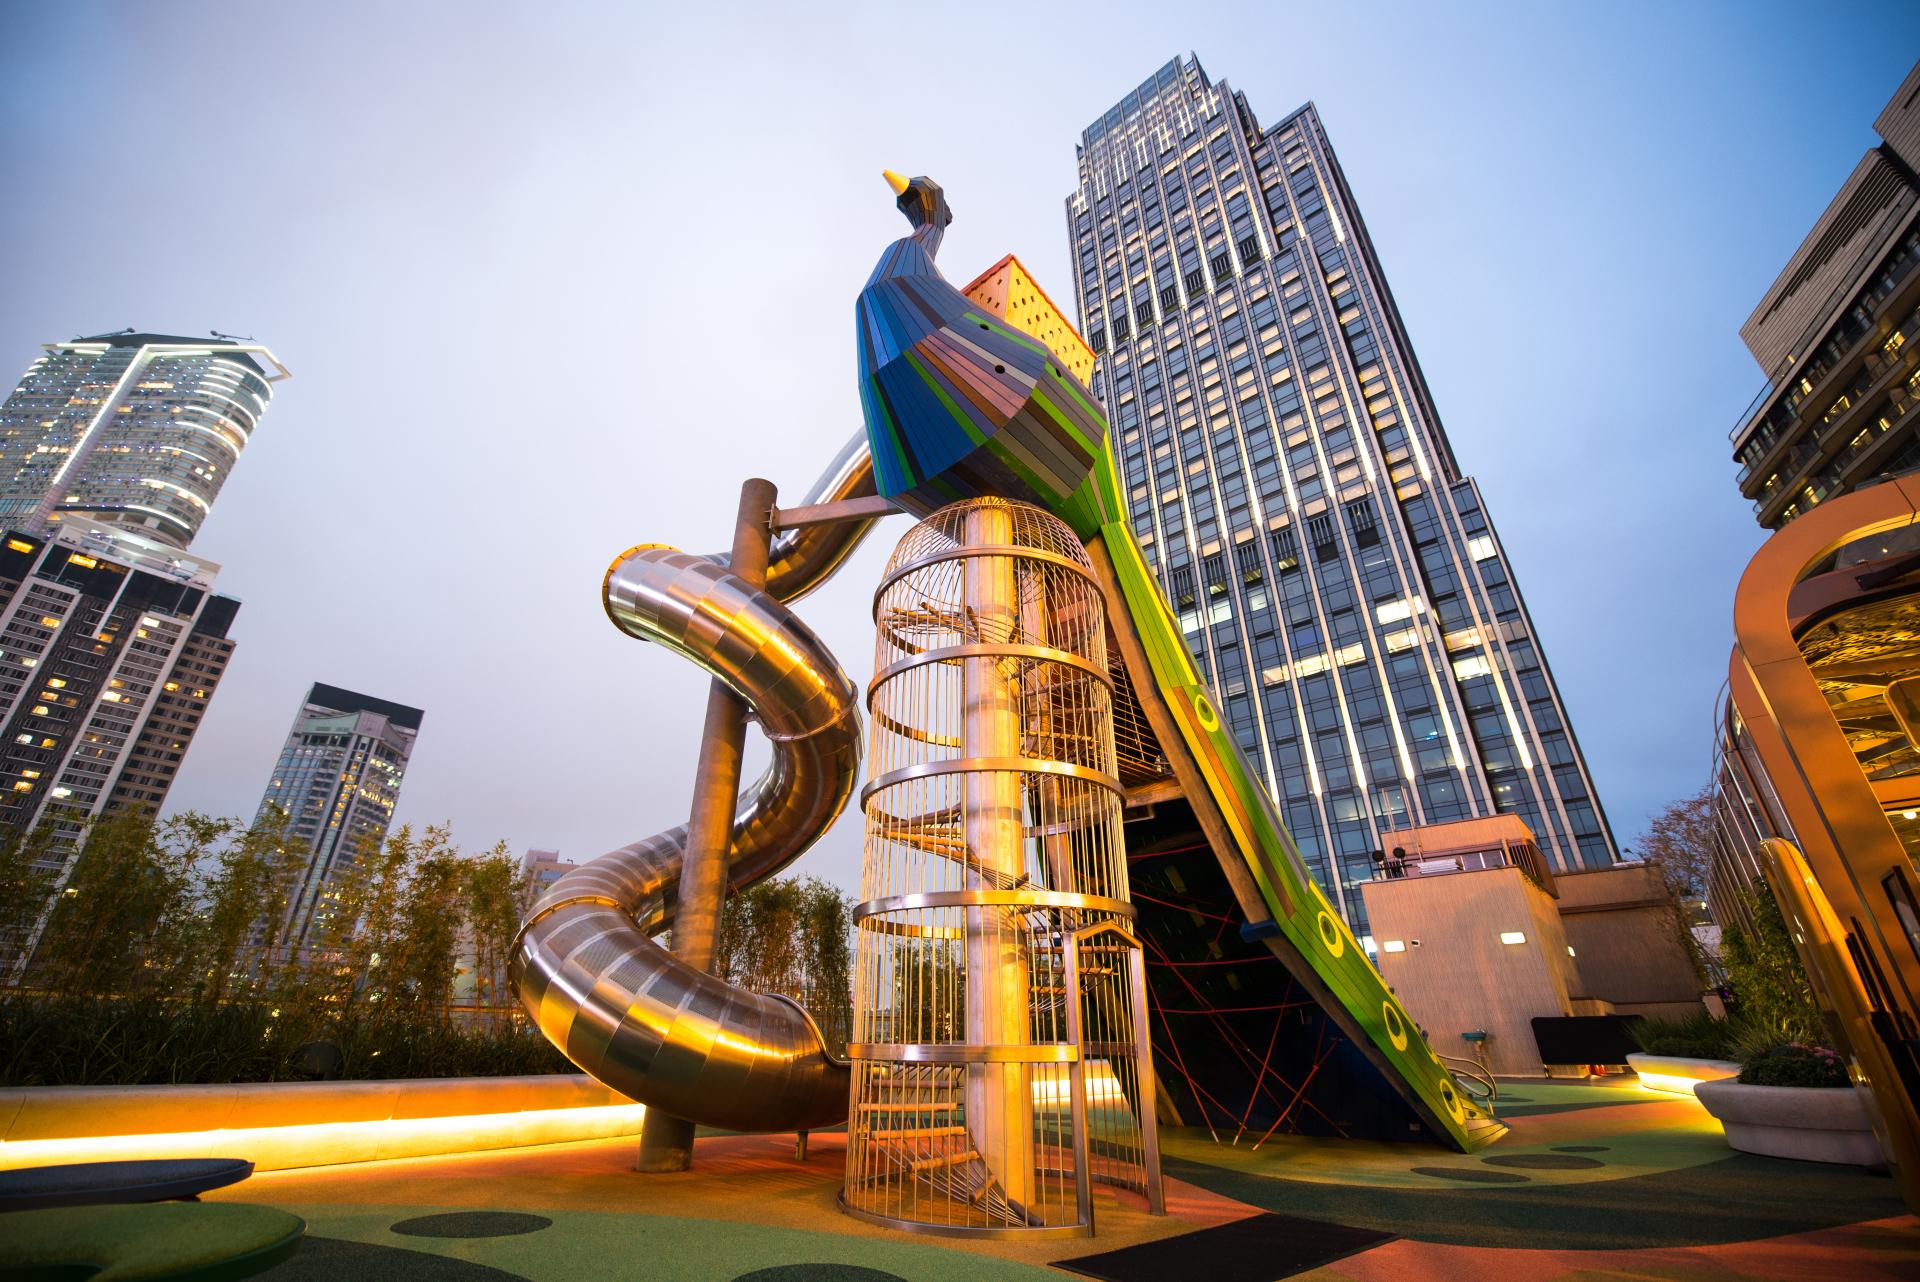 Peacock playground with slide, Hong Kong